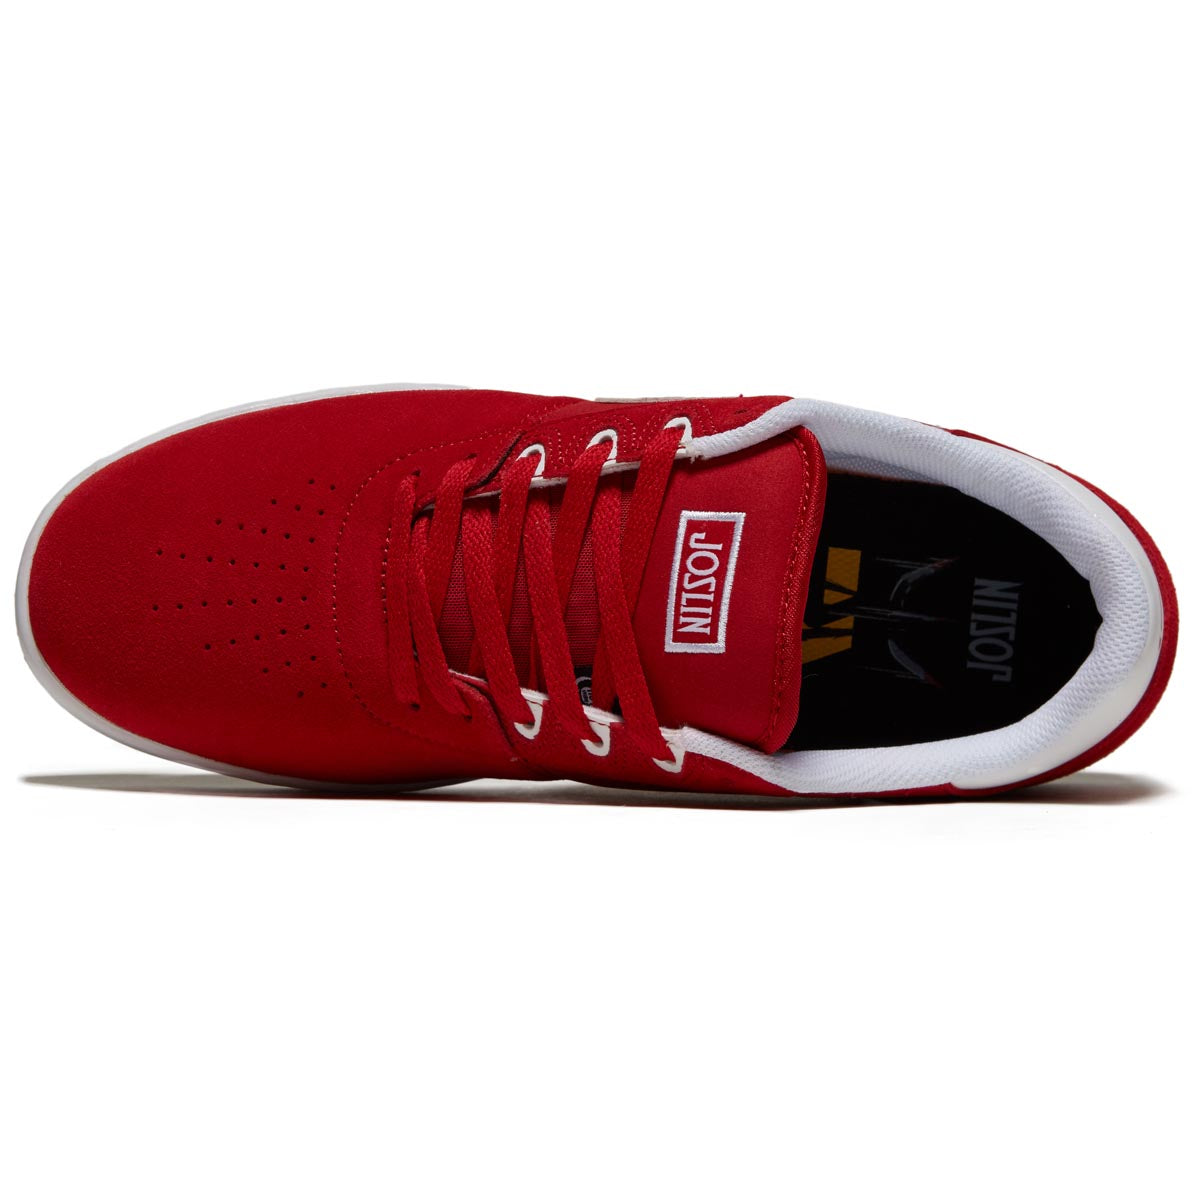 Etnies Josl1n Shoes - Red/White image 3